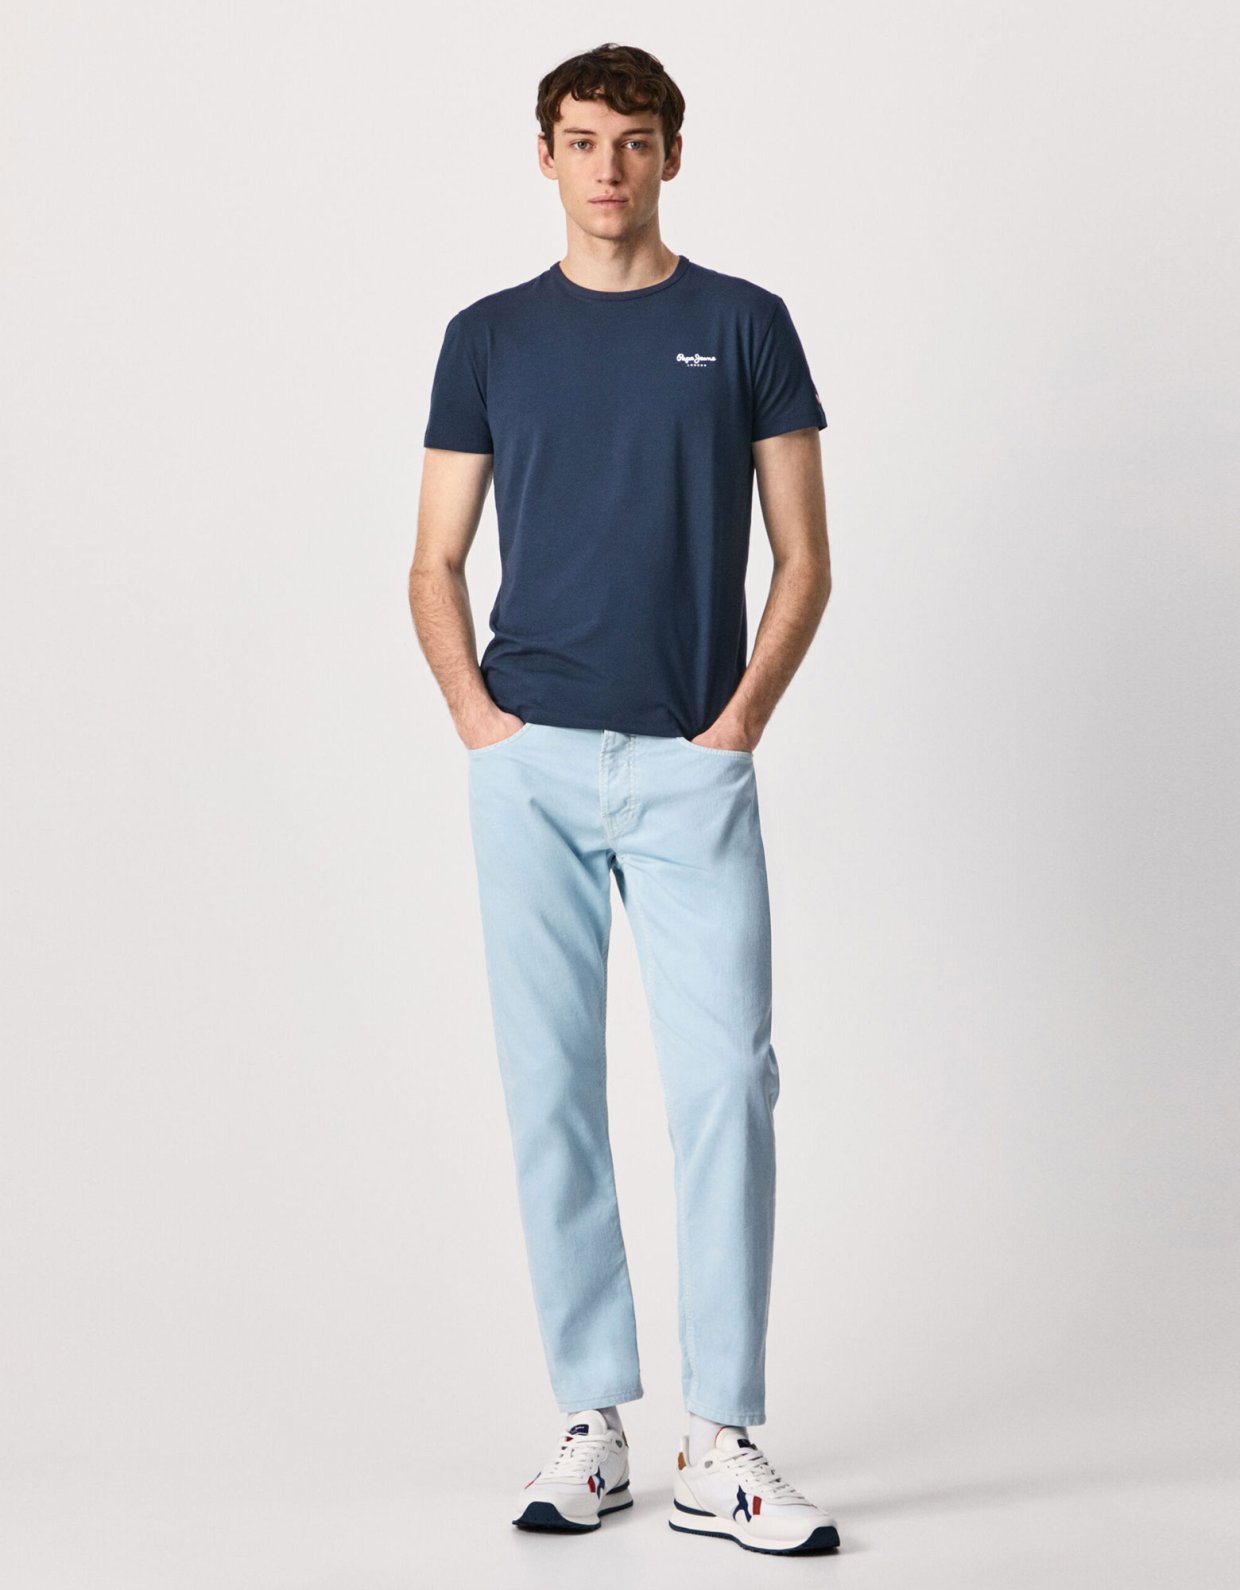 Pepe Jeans Original basic t-shirt navy